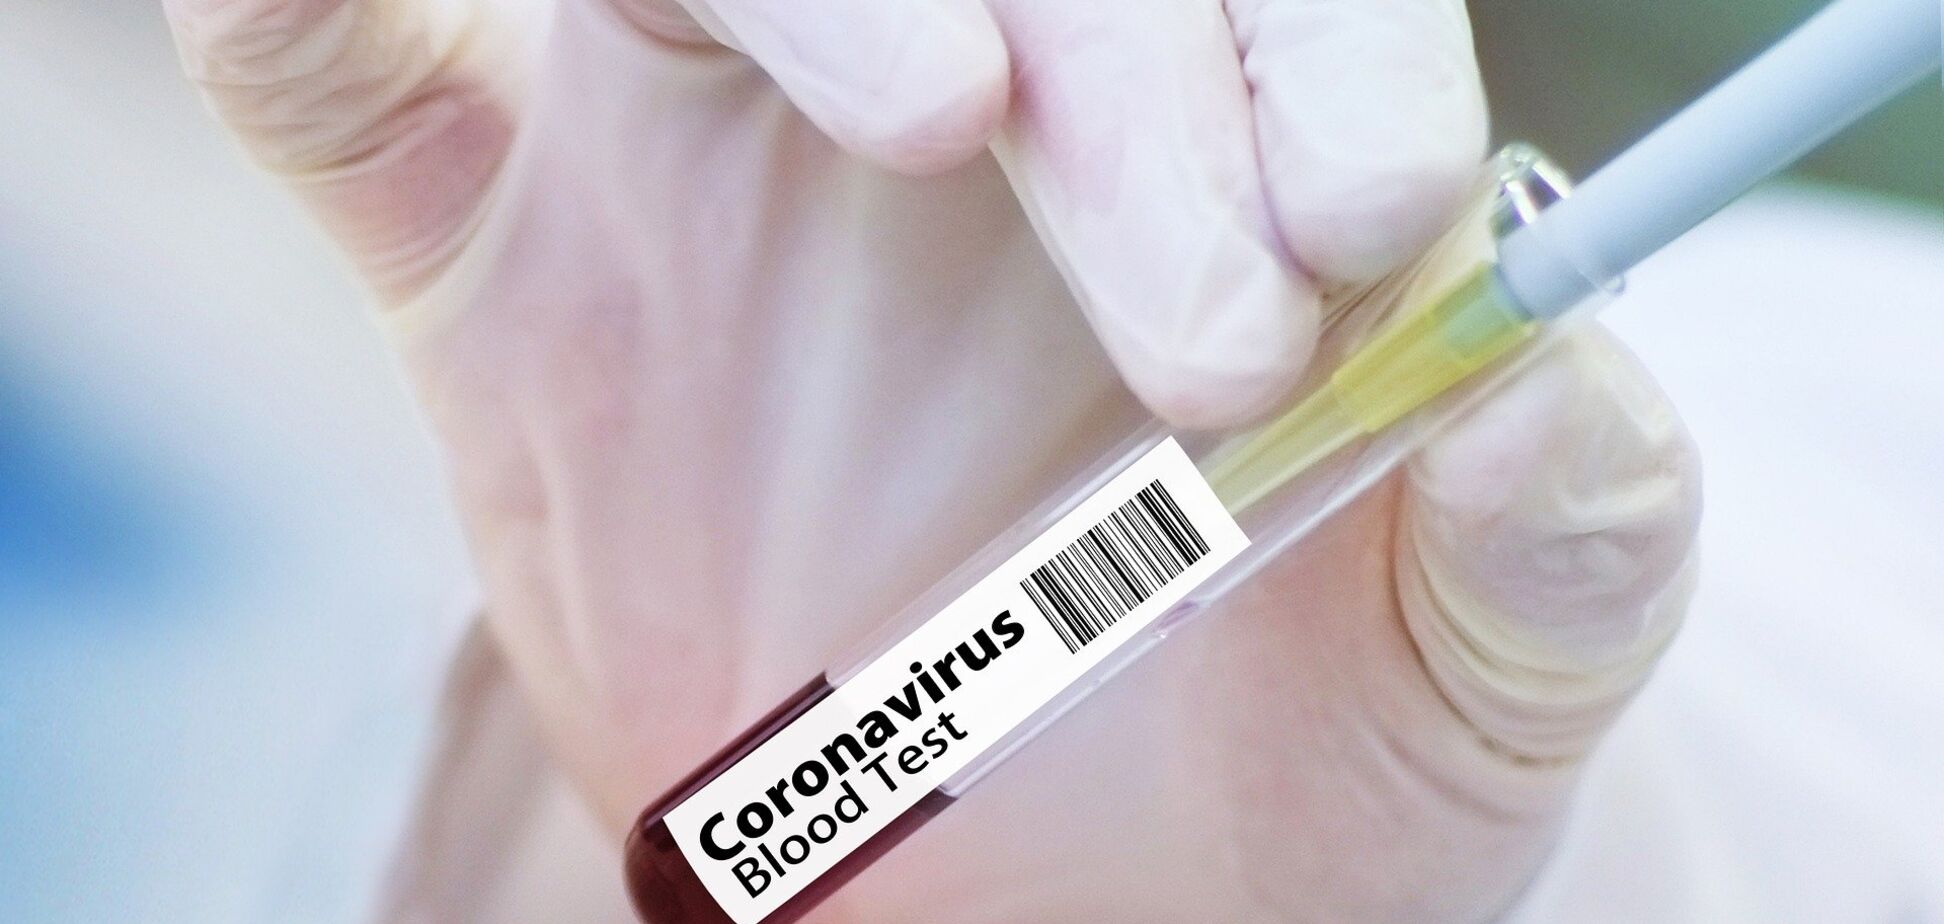 В мире разрабатывают 20 вакцин от коронавируса - ВОЗ